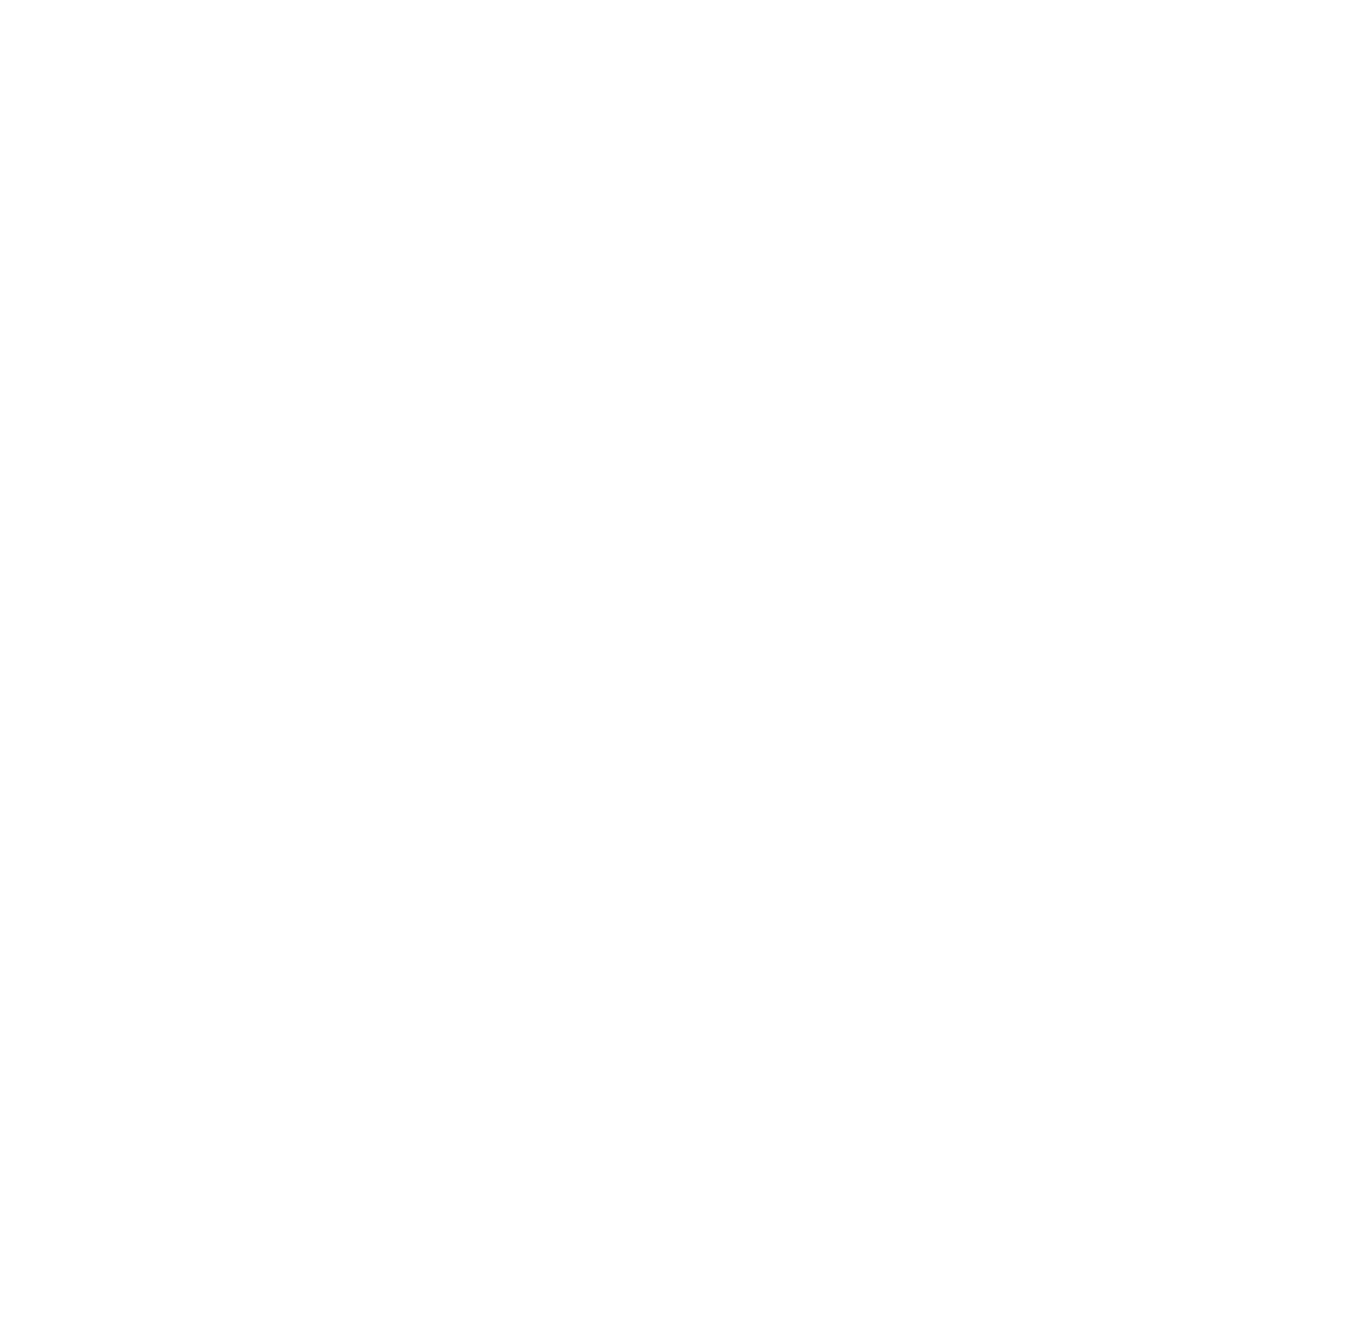 ADK centennial logo